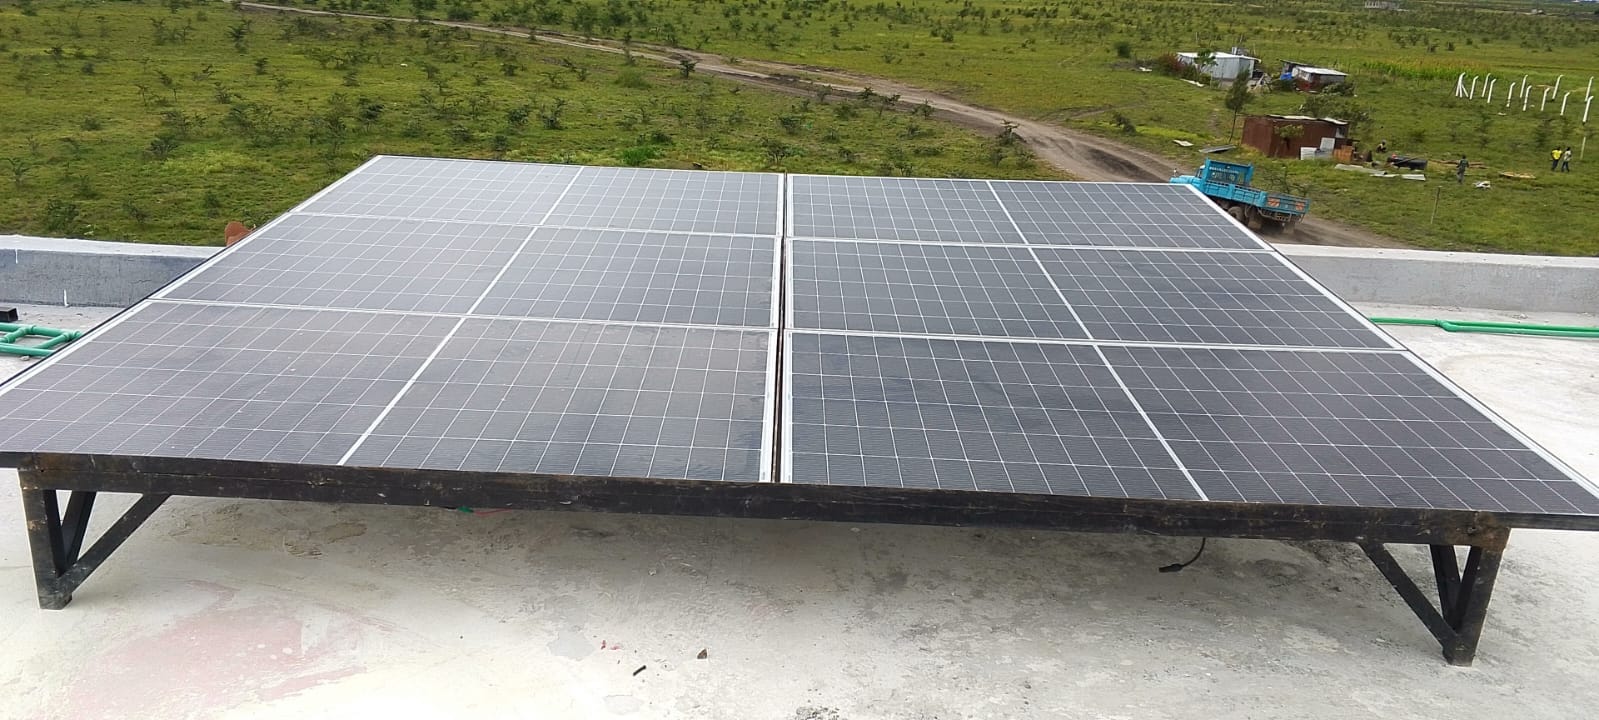 solar panels kenya by WanjaMall